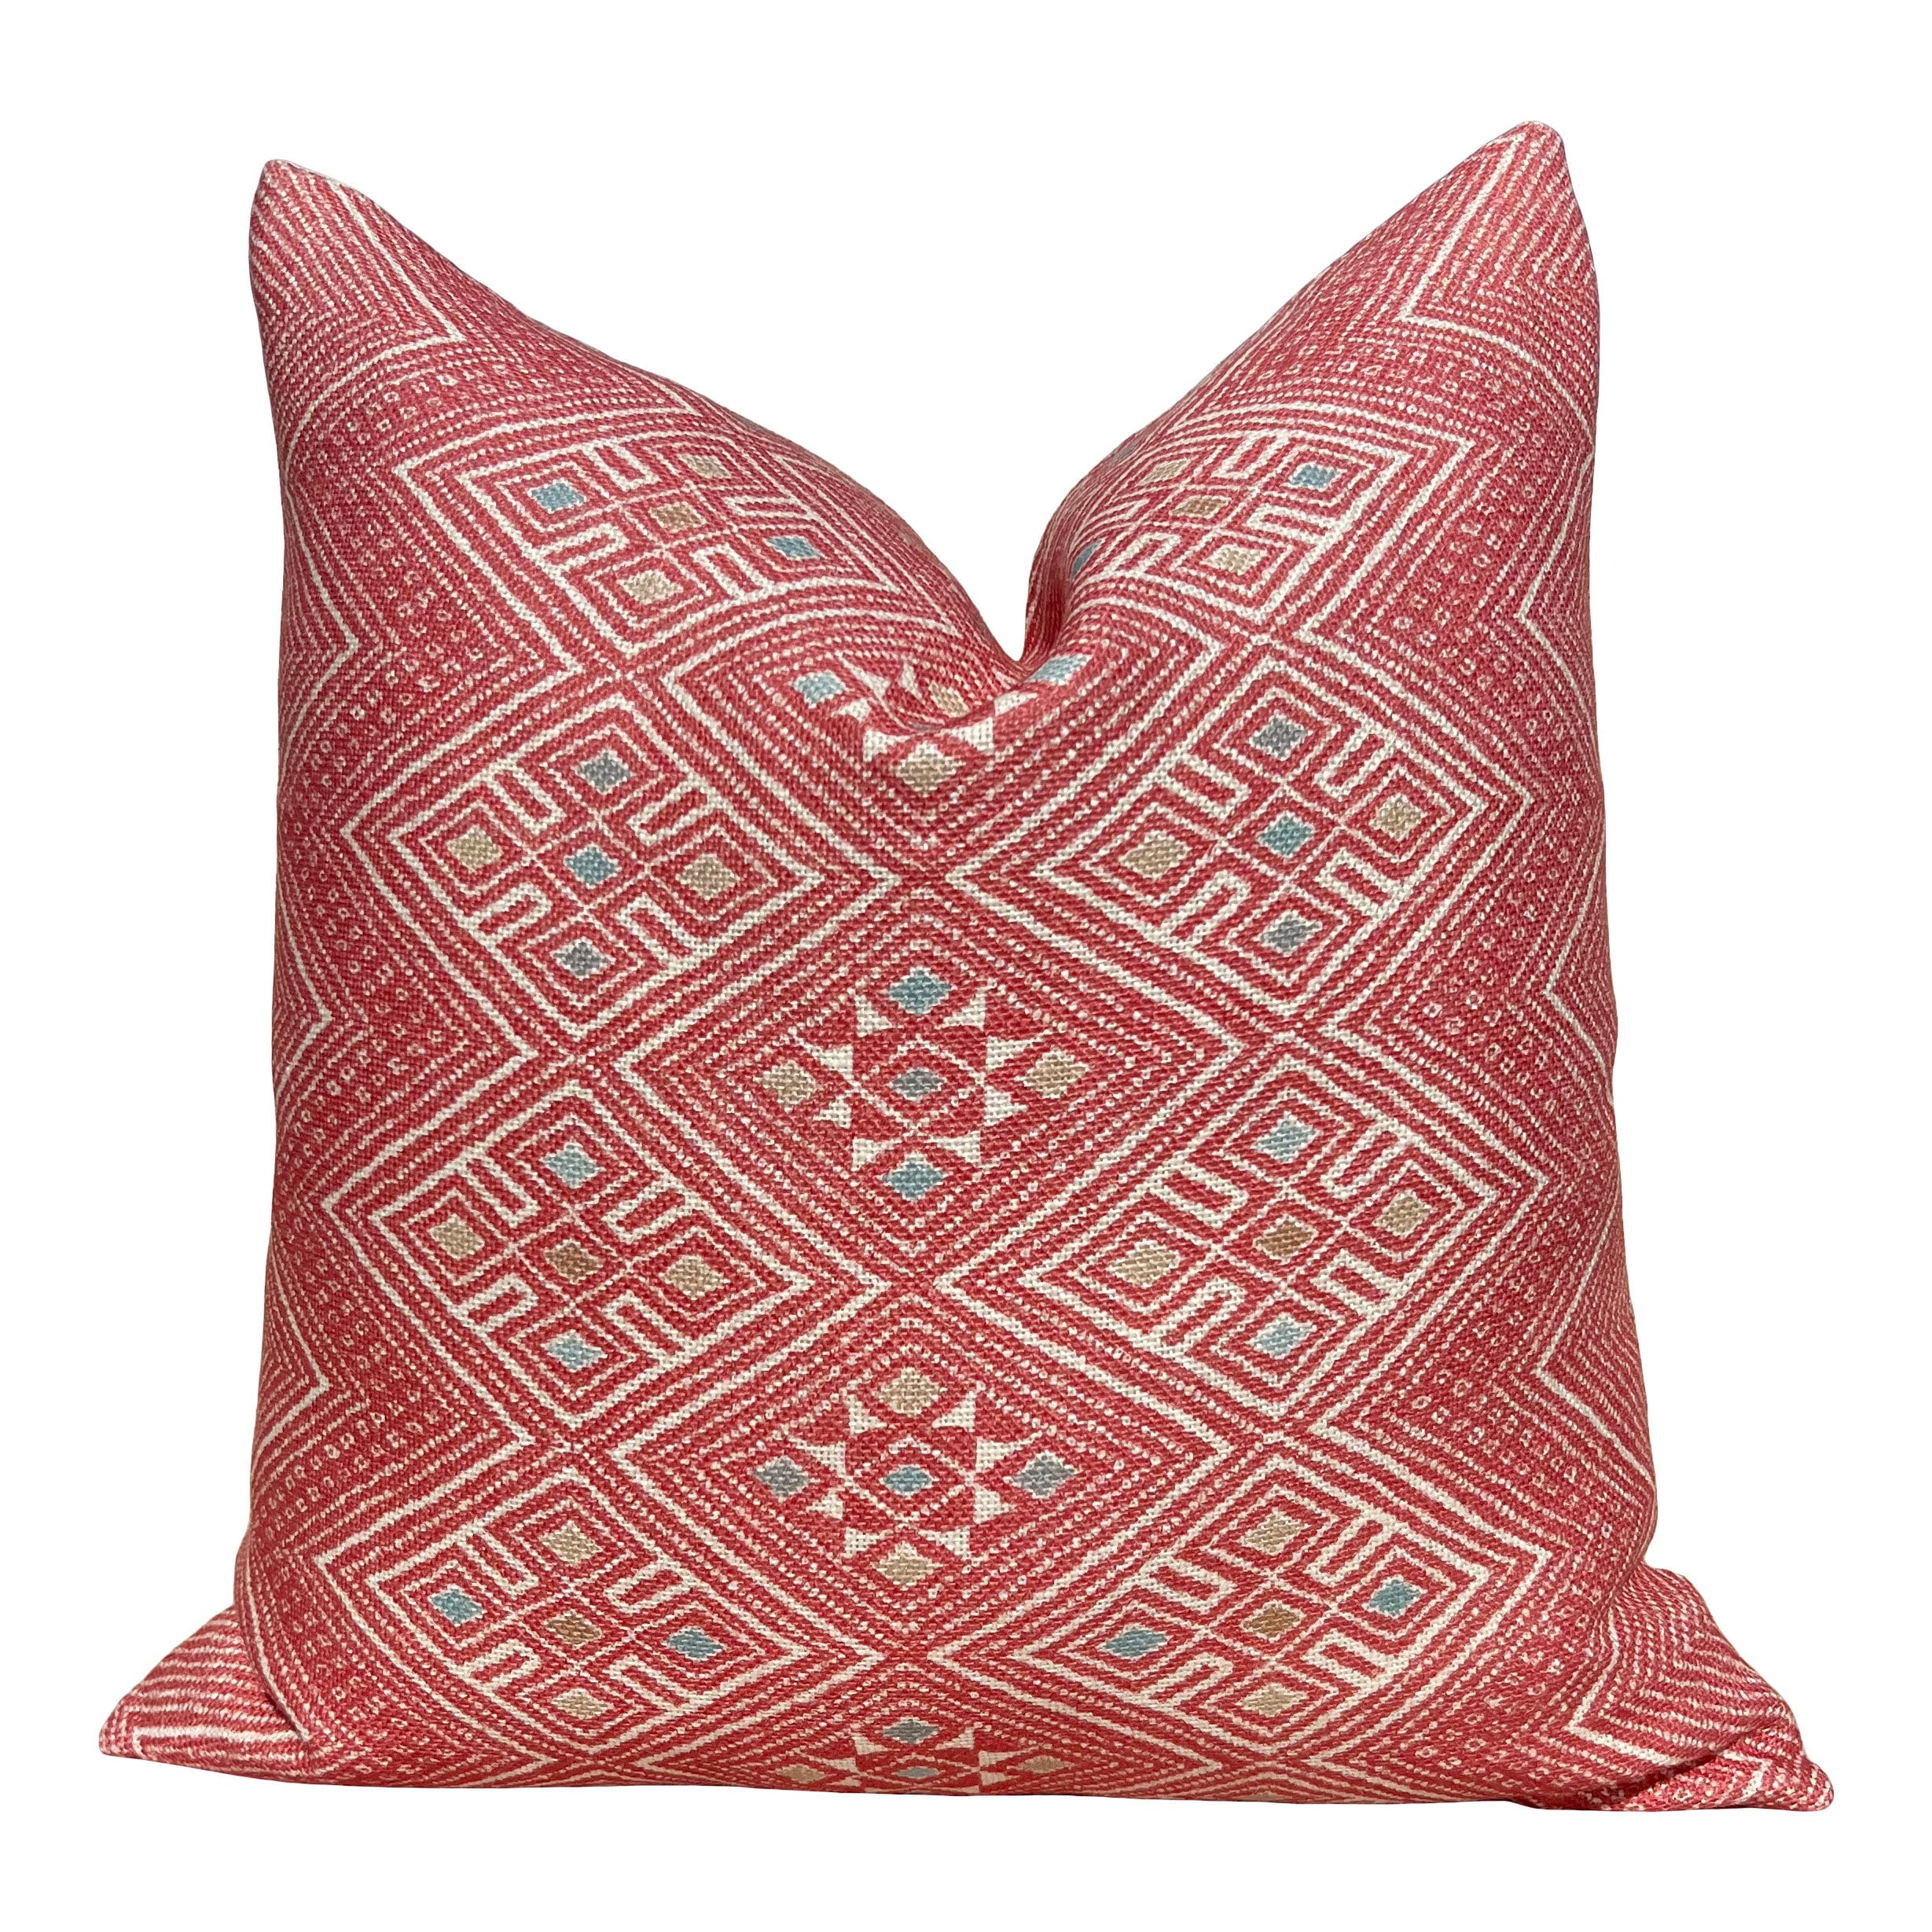 Thibaut High Plains Pillow in Coral. Designer Pillows, High End Pillows, Coral Pillow Cover, Zig Zag Accent Pillows, Lumbar Geometric Pillow